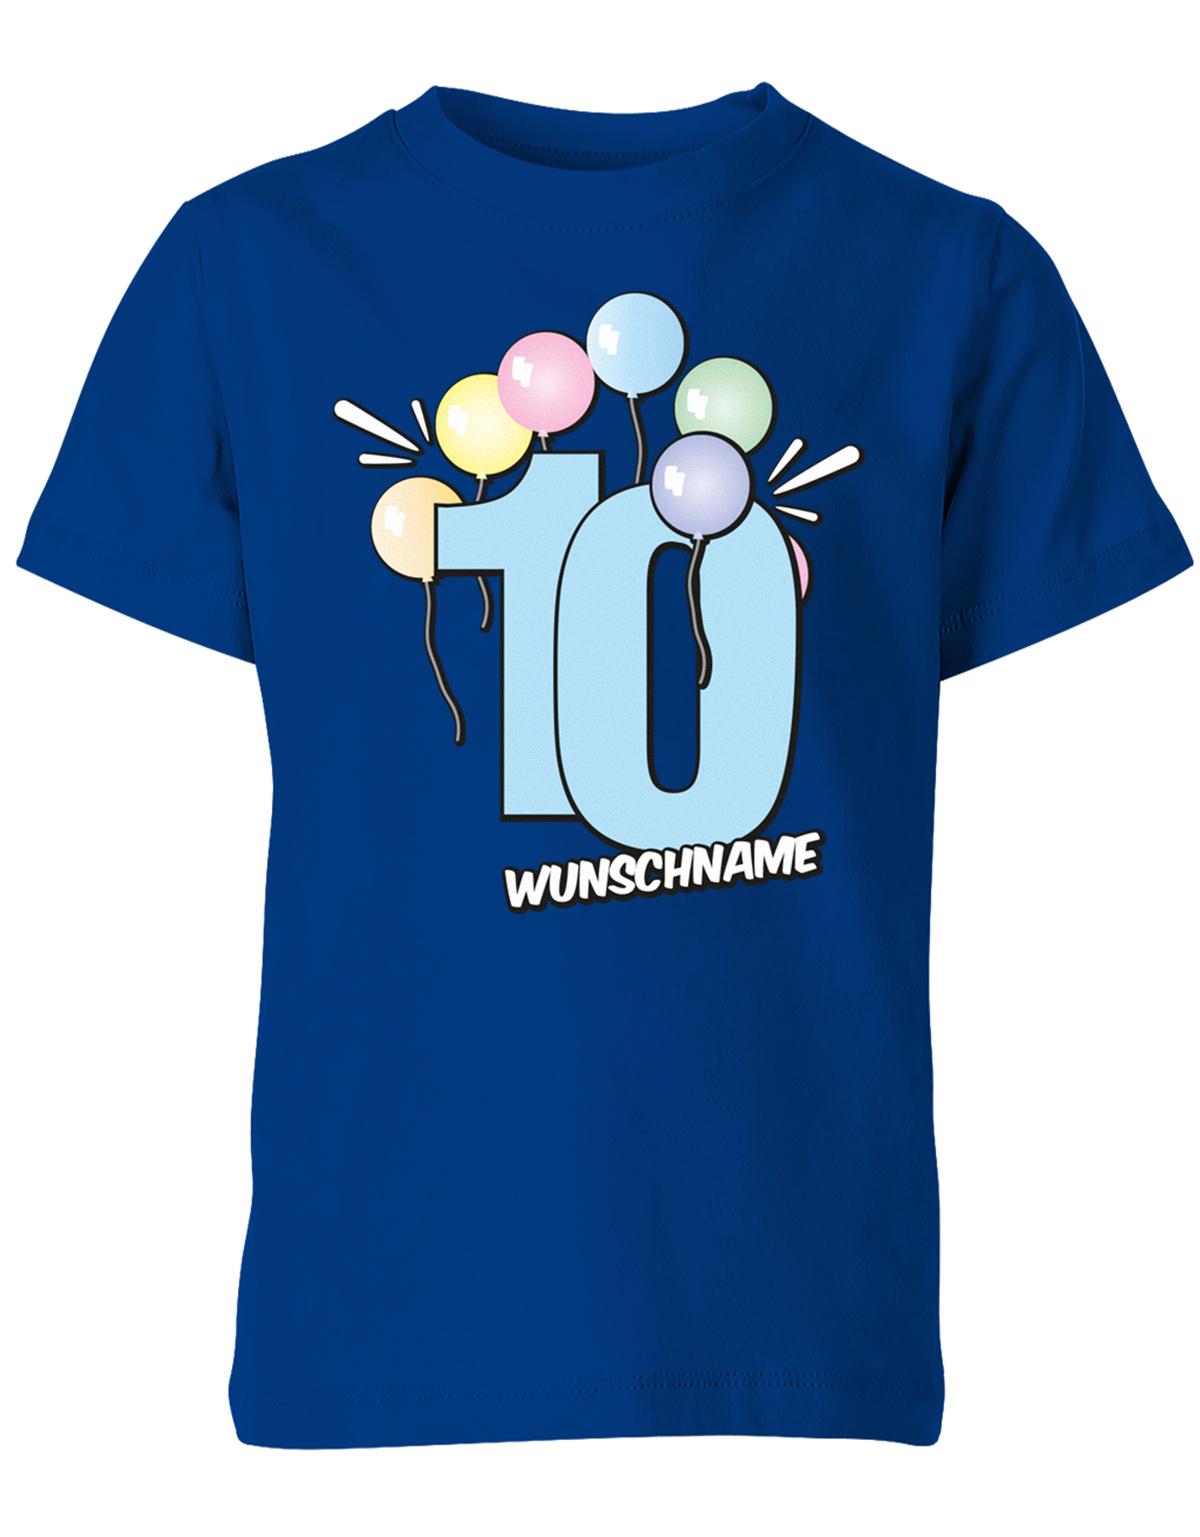 Luftballons-pastell-10-geburtstag-wunschname-kinder-shirt-royalblau